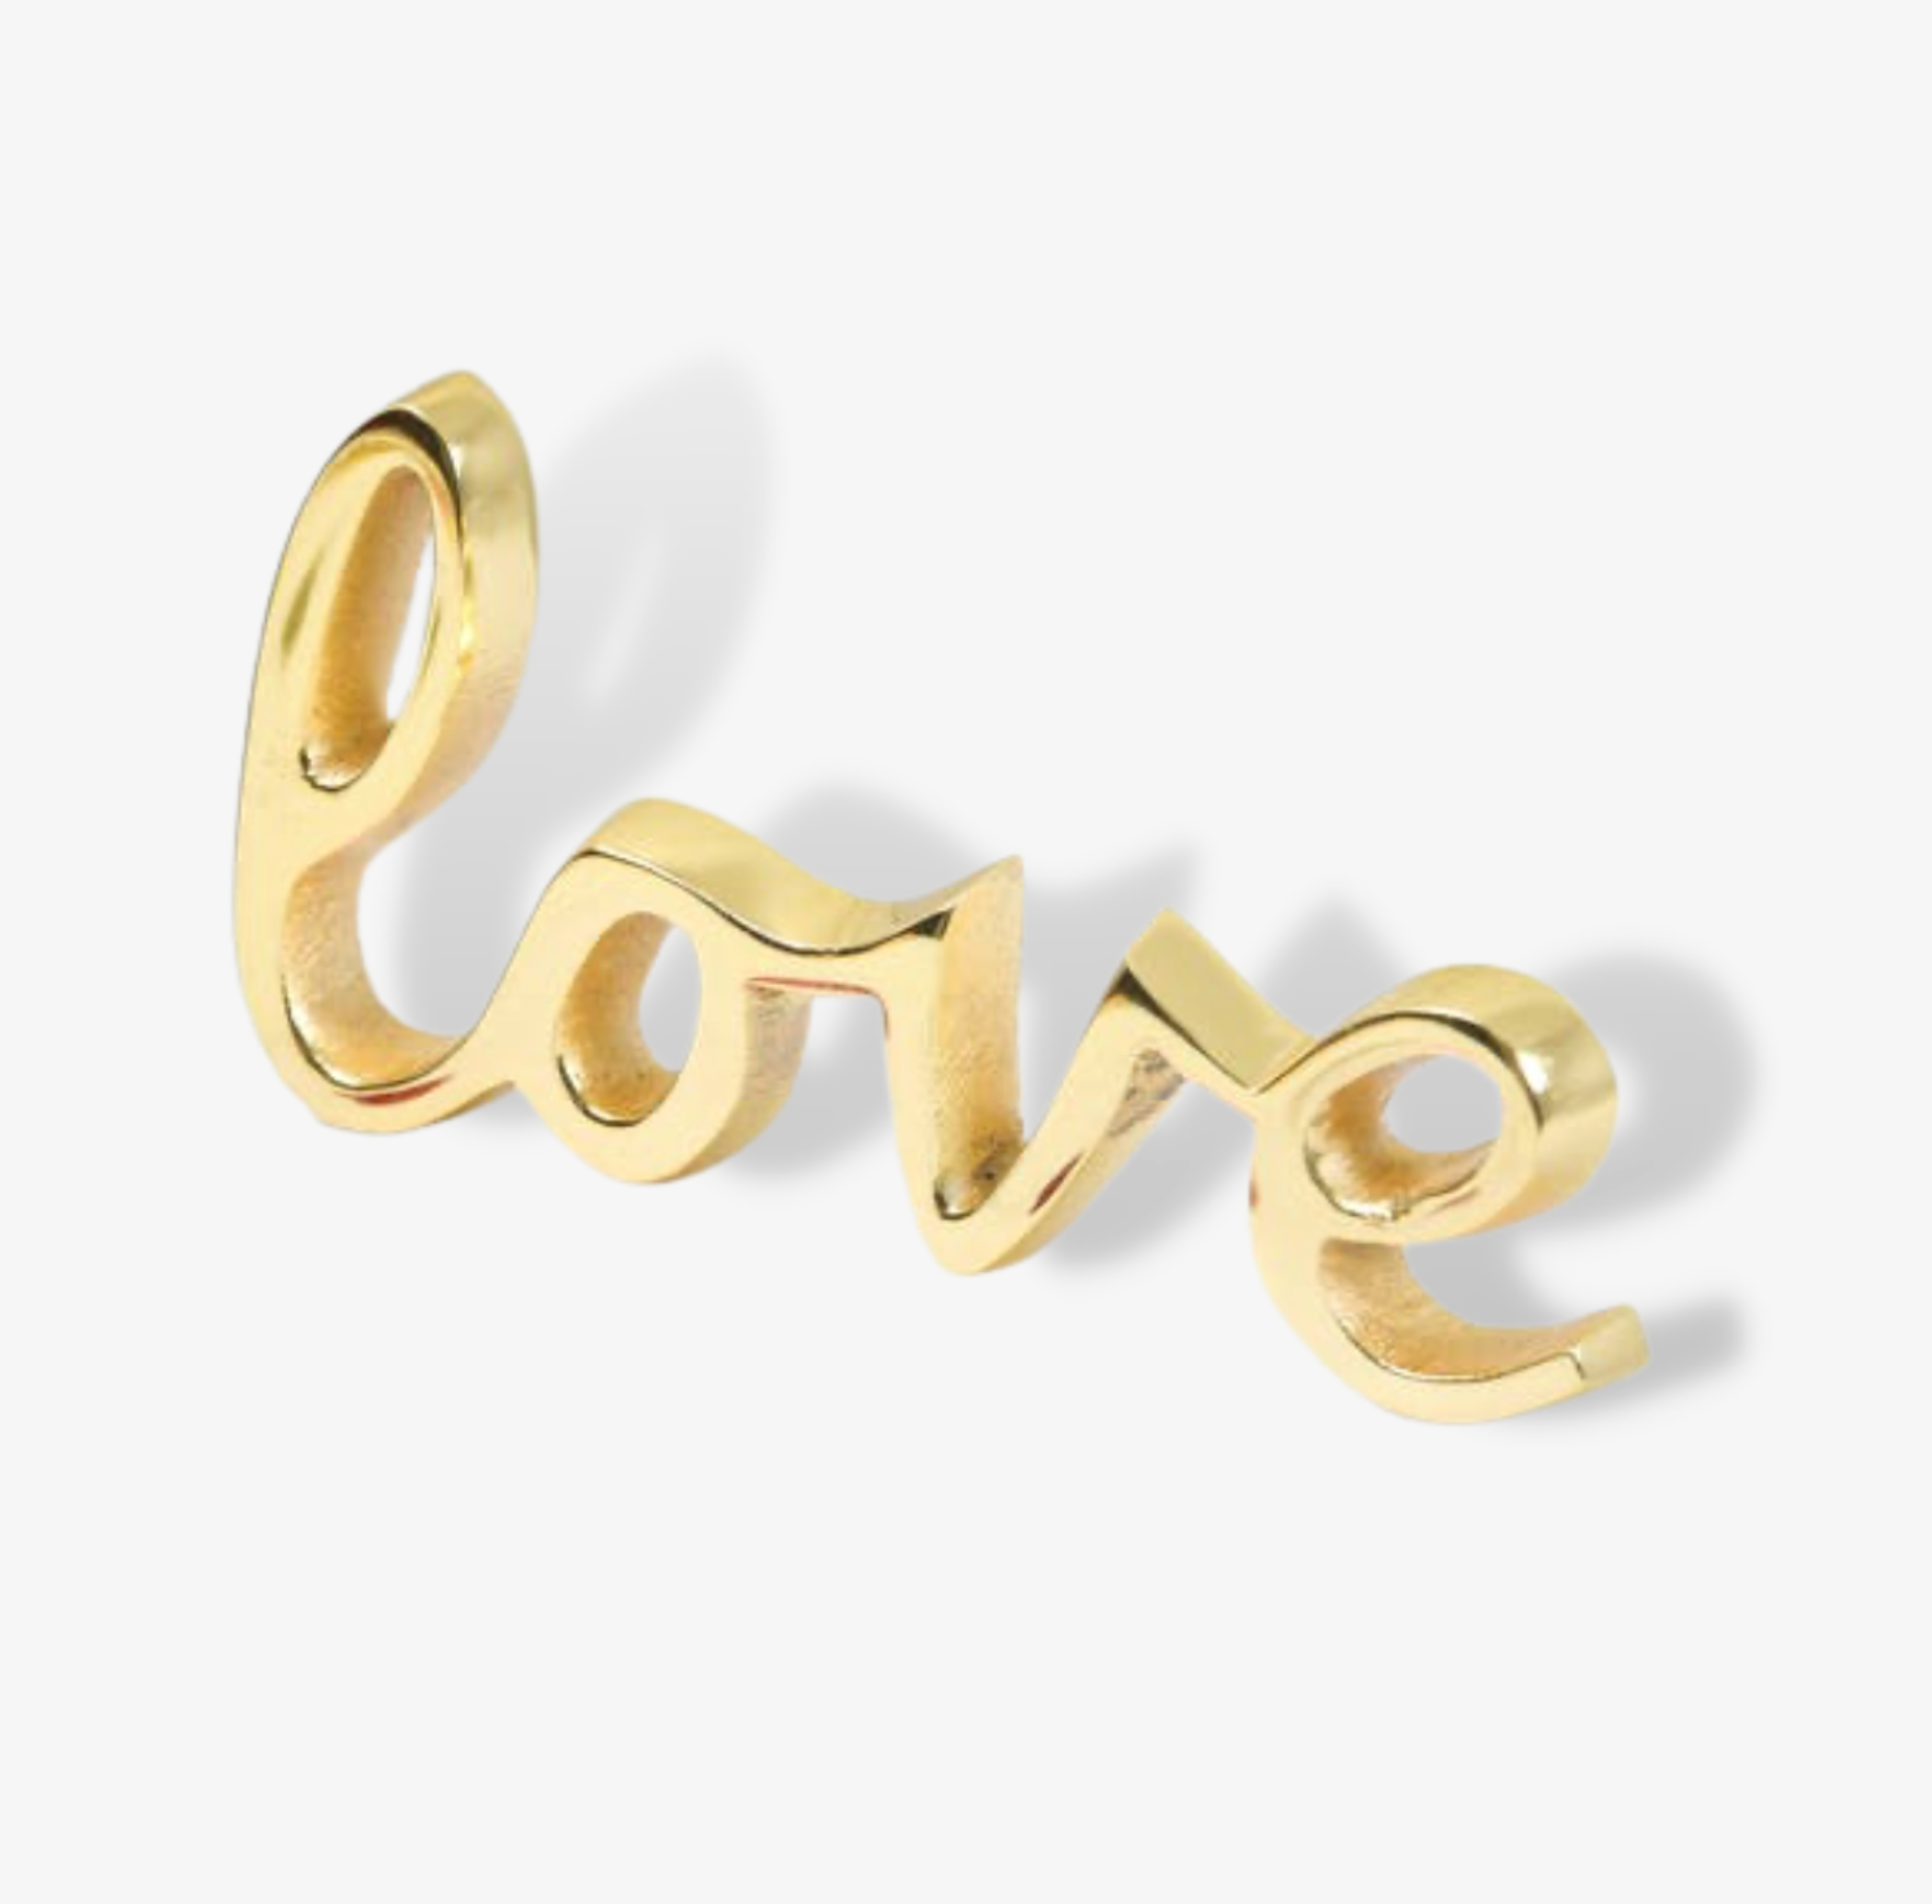 Gold Love Decorative Word